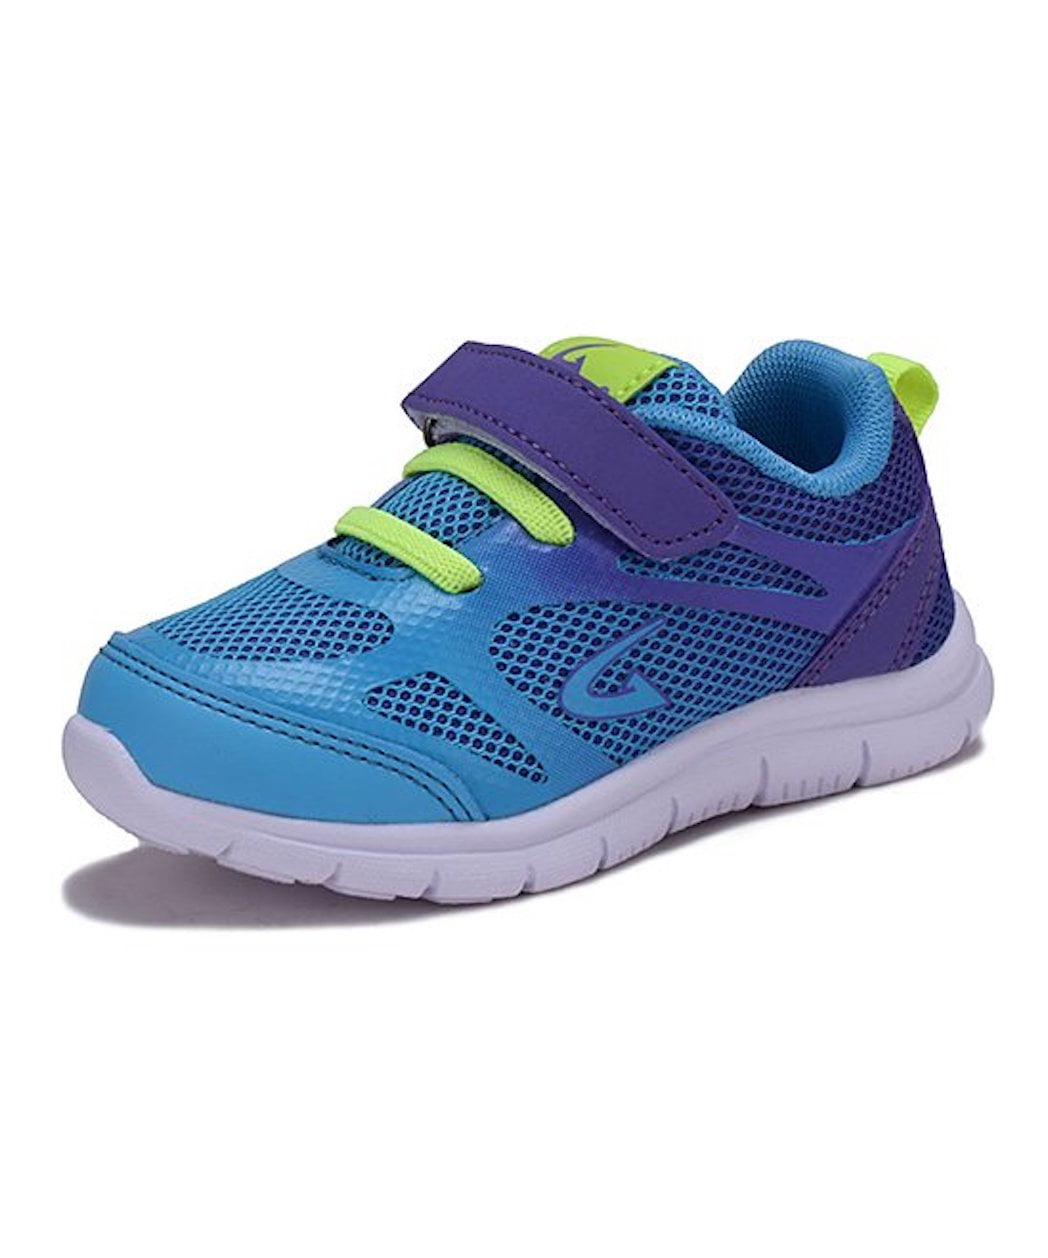 Girls' Sneaker Toddler Shoes - Tennis Kid Shoe - White & Aqua or Blue ...